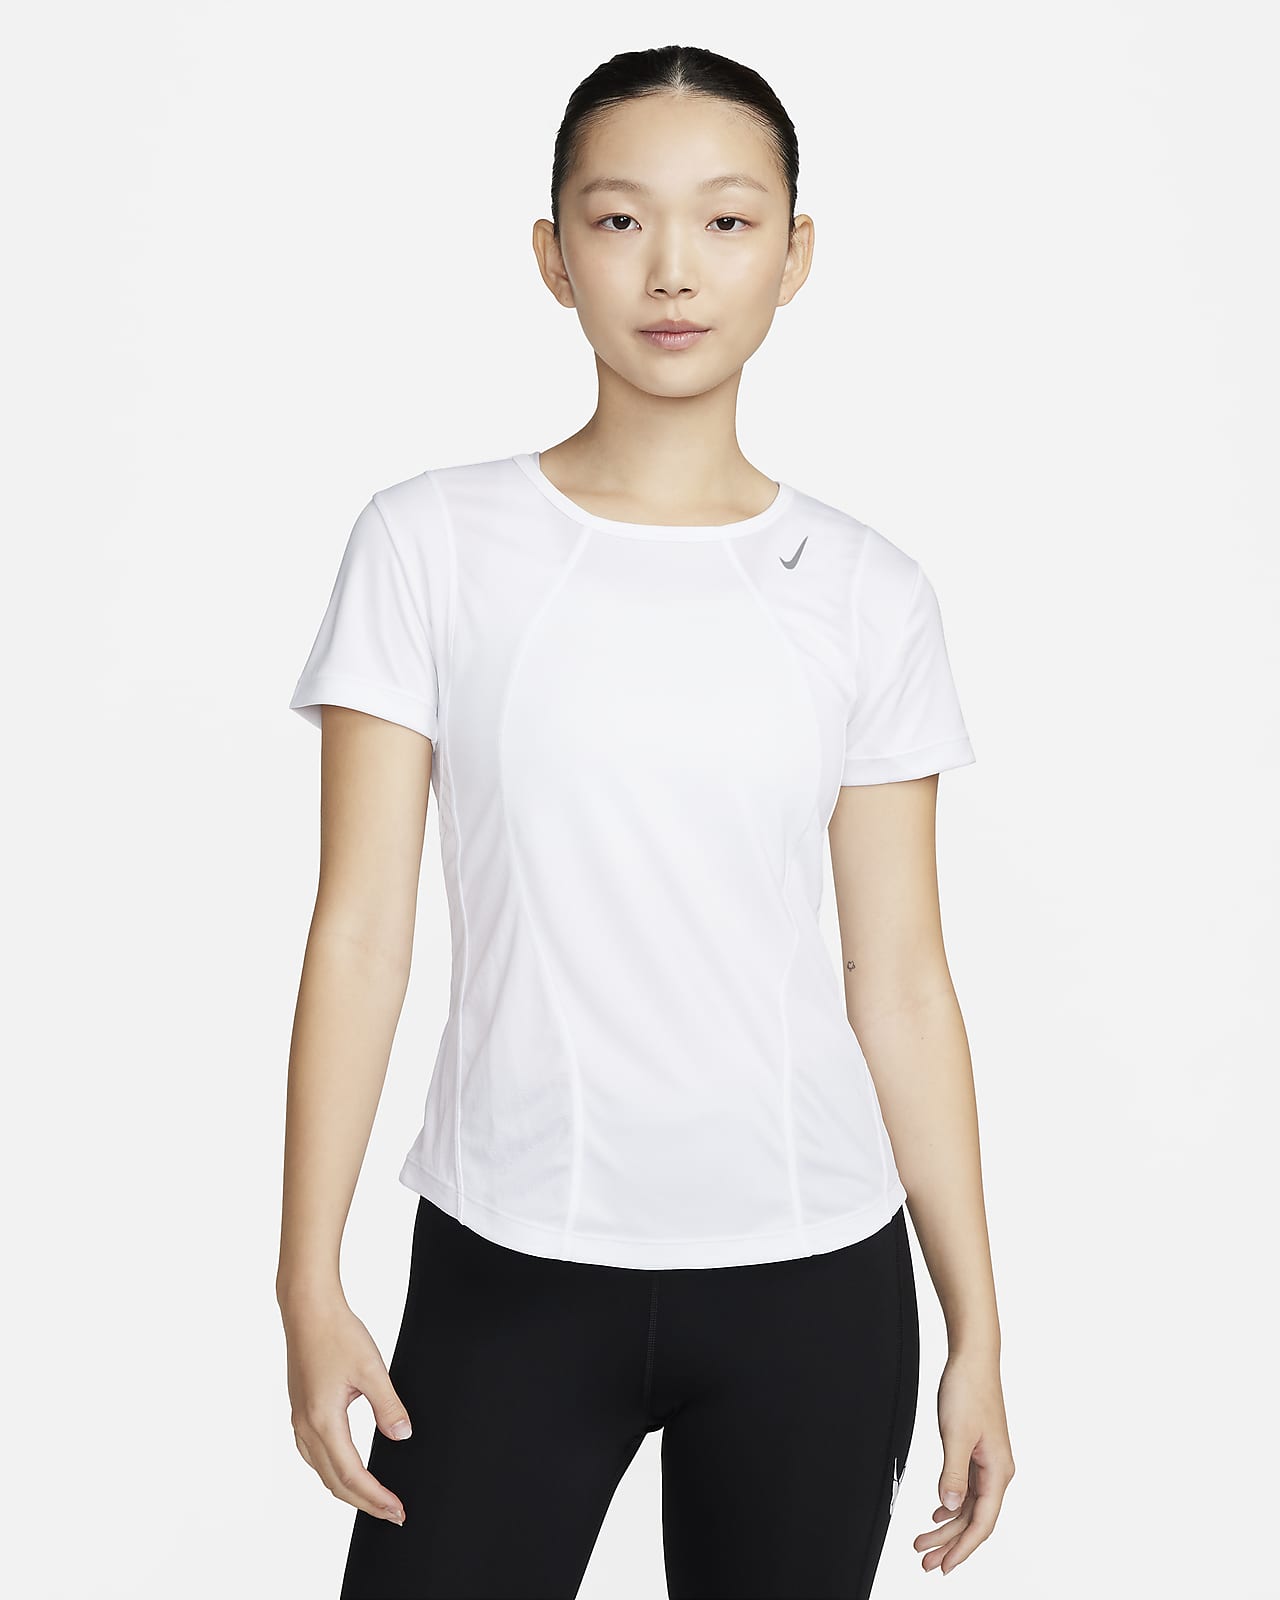 Nike Fast Women's Dri-FIT Short-Sleeve Running Top